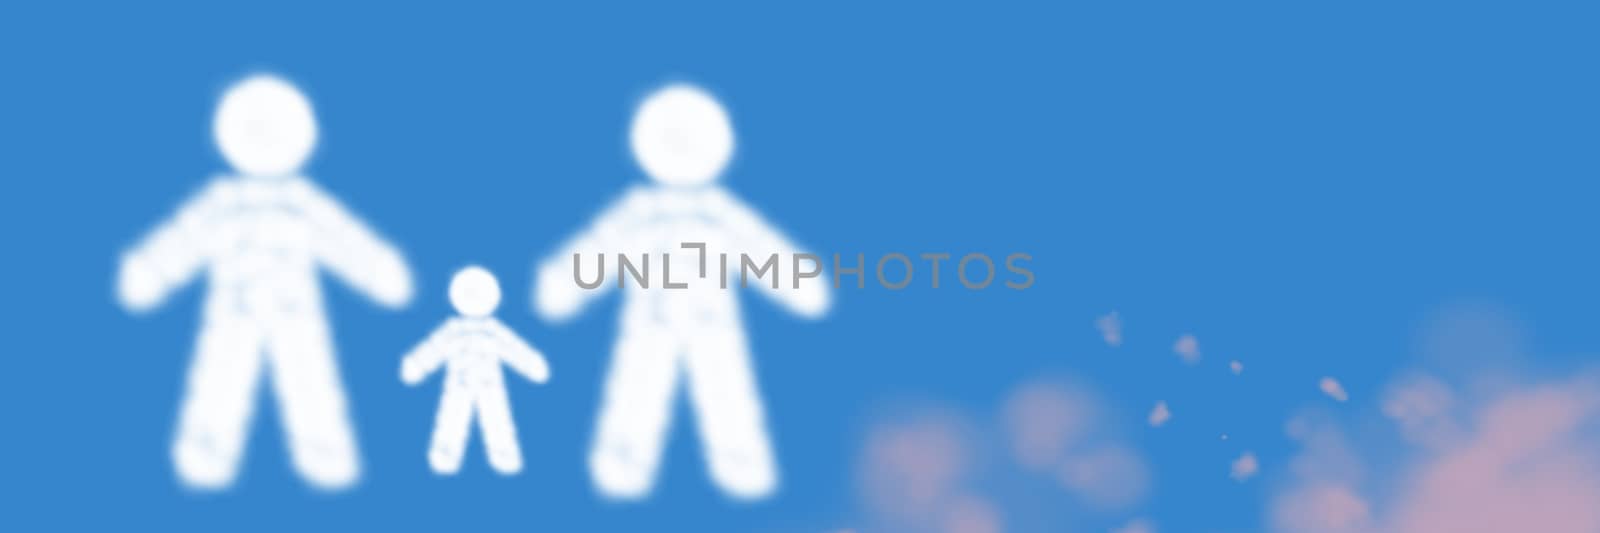 Digital composite of Composed Image of People Symbols on blue background